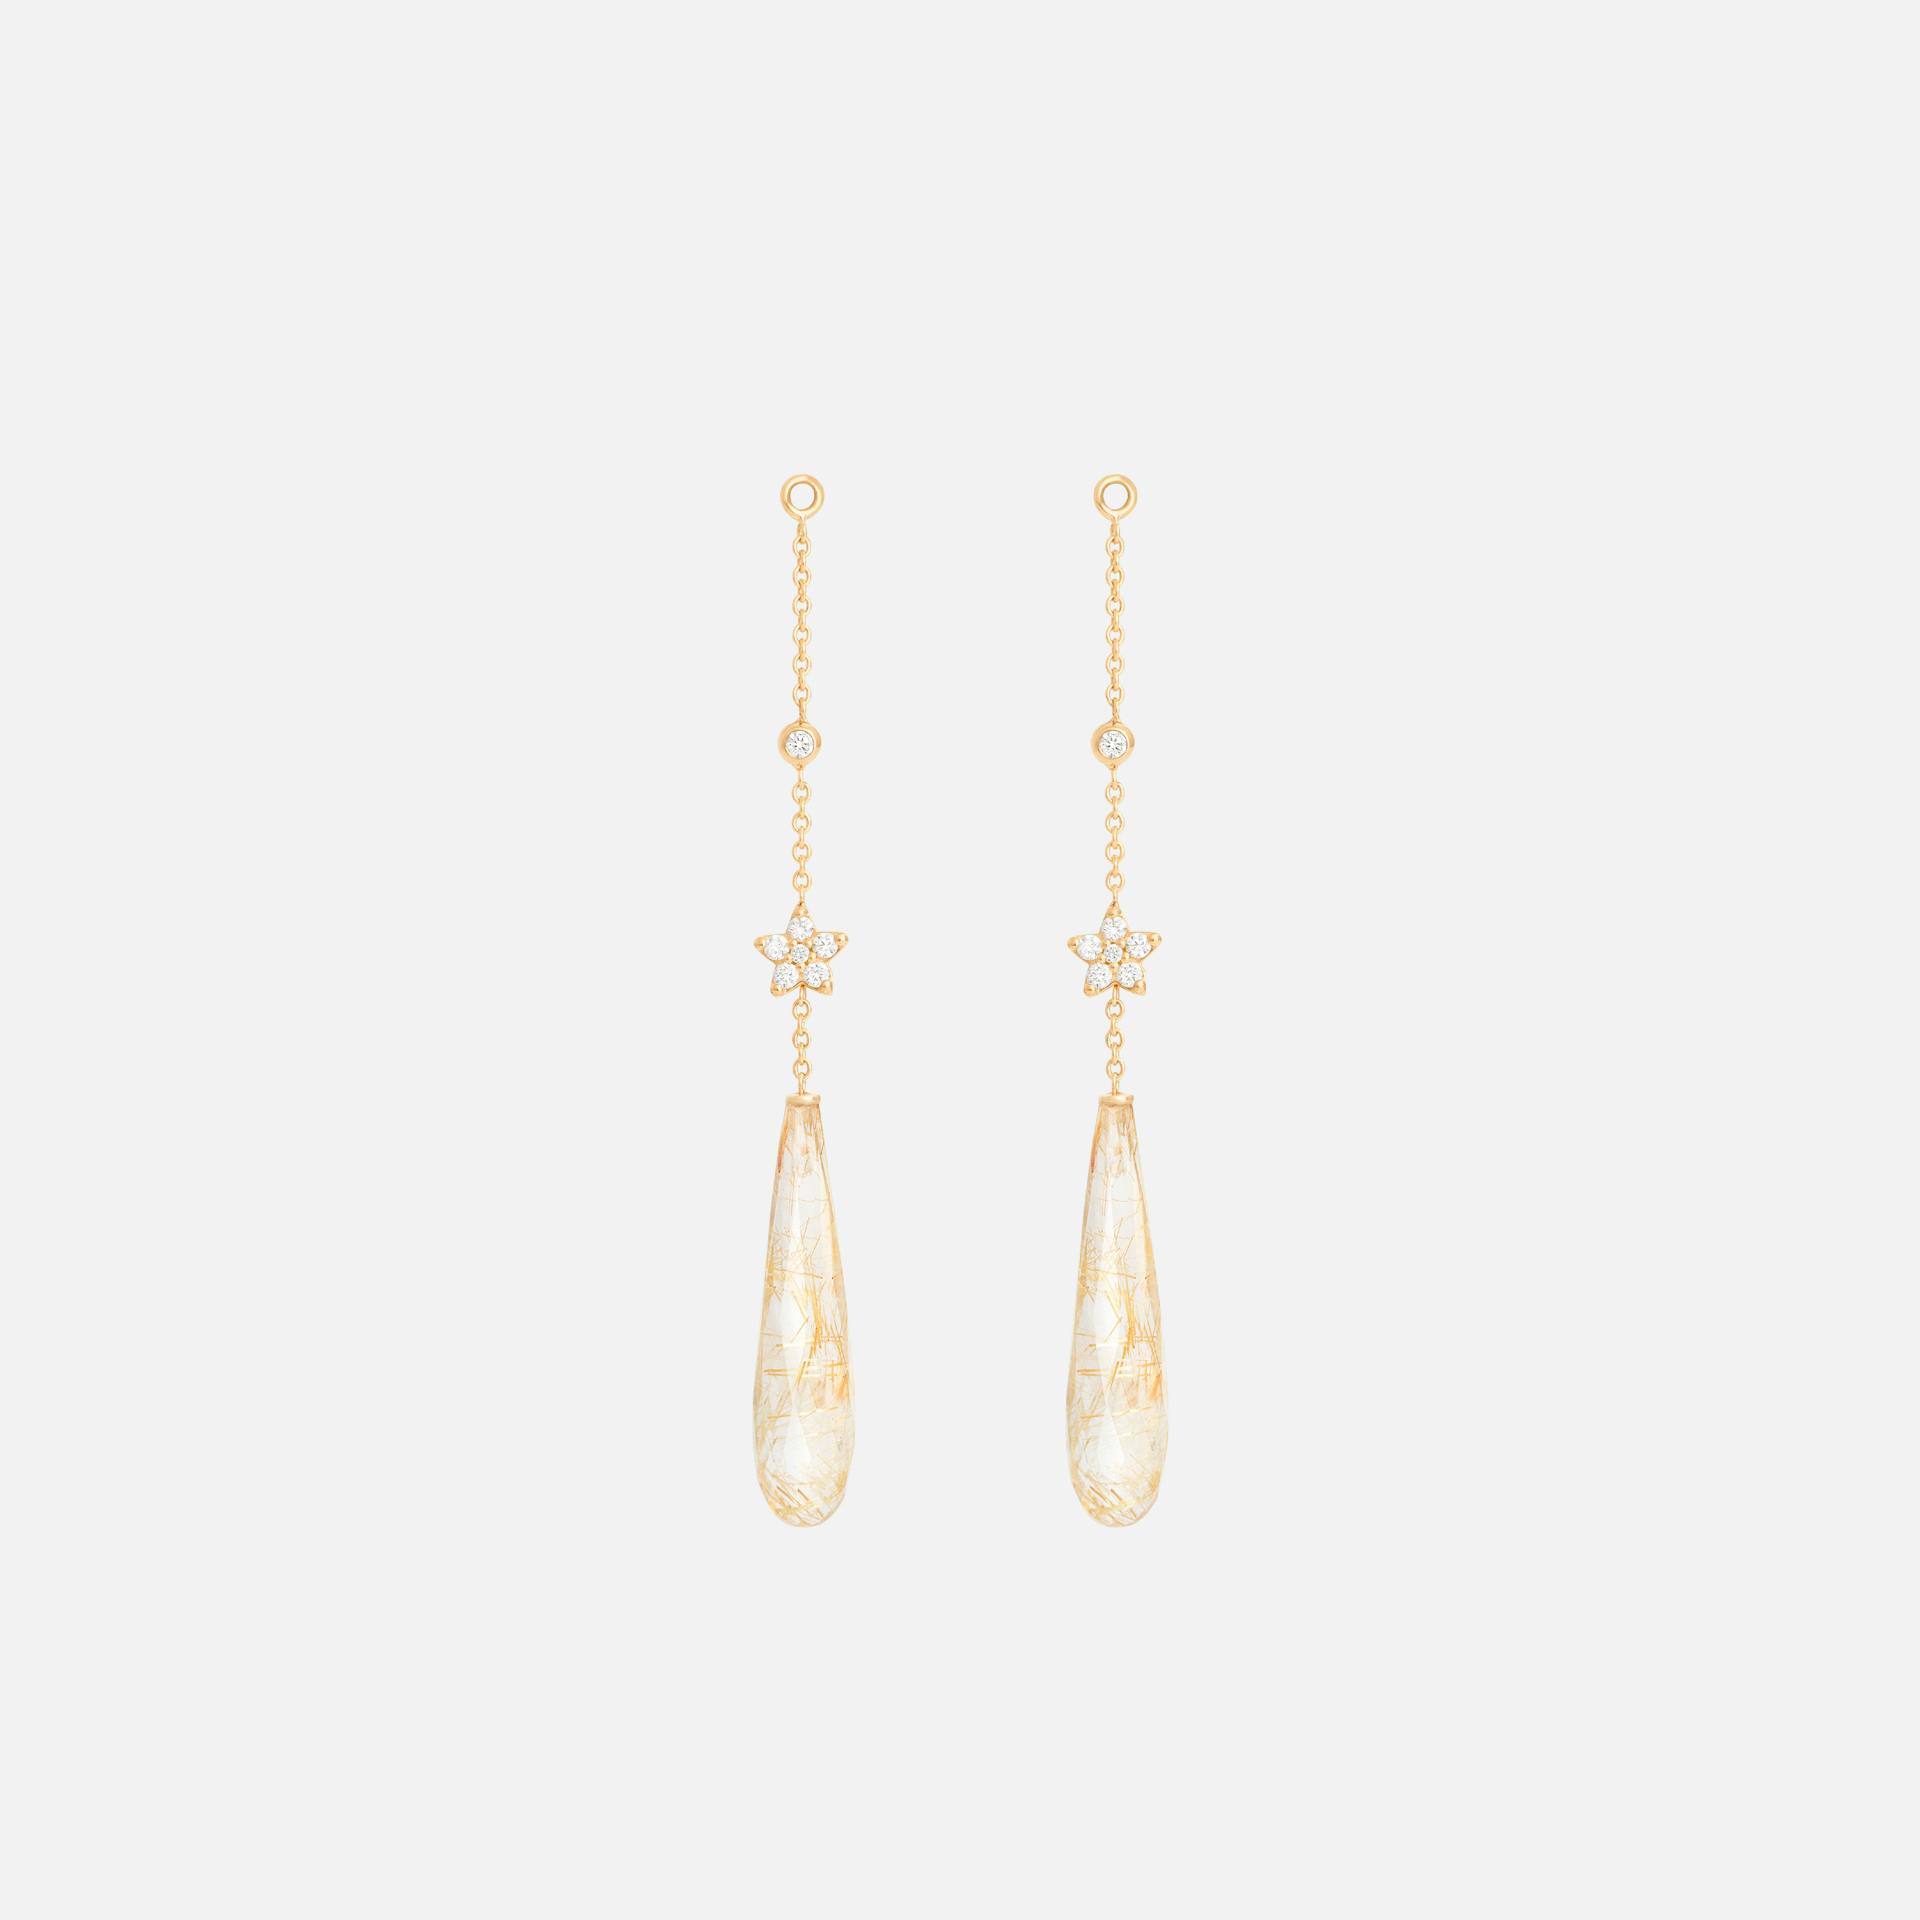 Shooting Stars earring pendants 18k gold and rutile quartz with diamonds 0.12 ct. TW. VS.